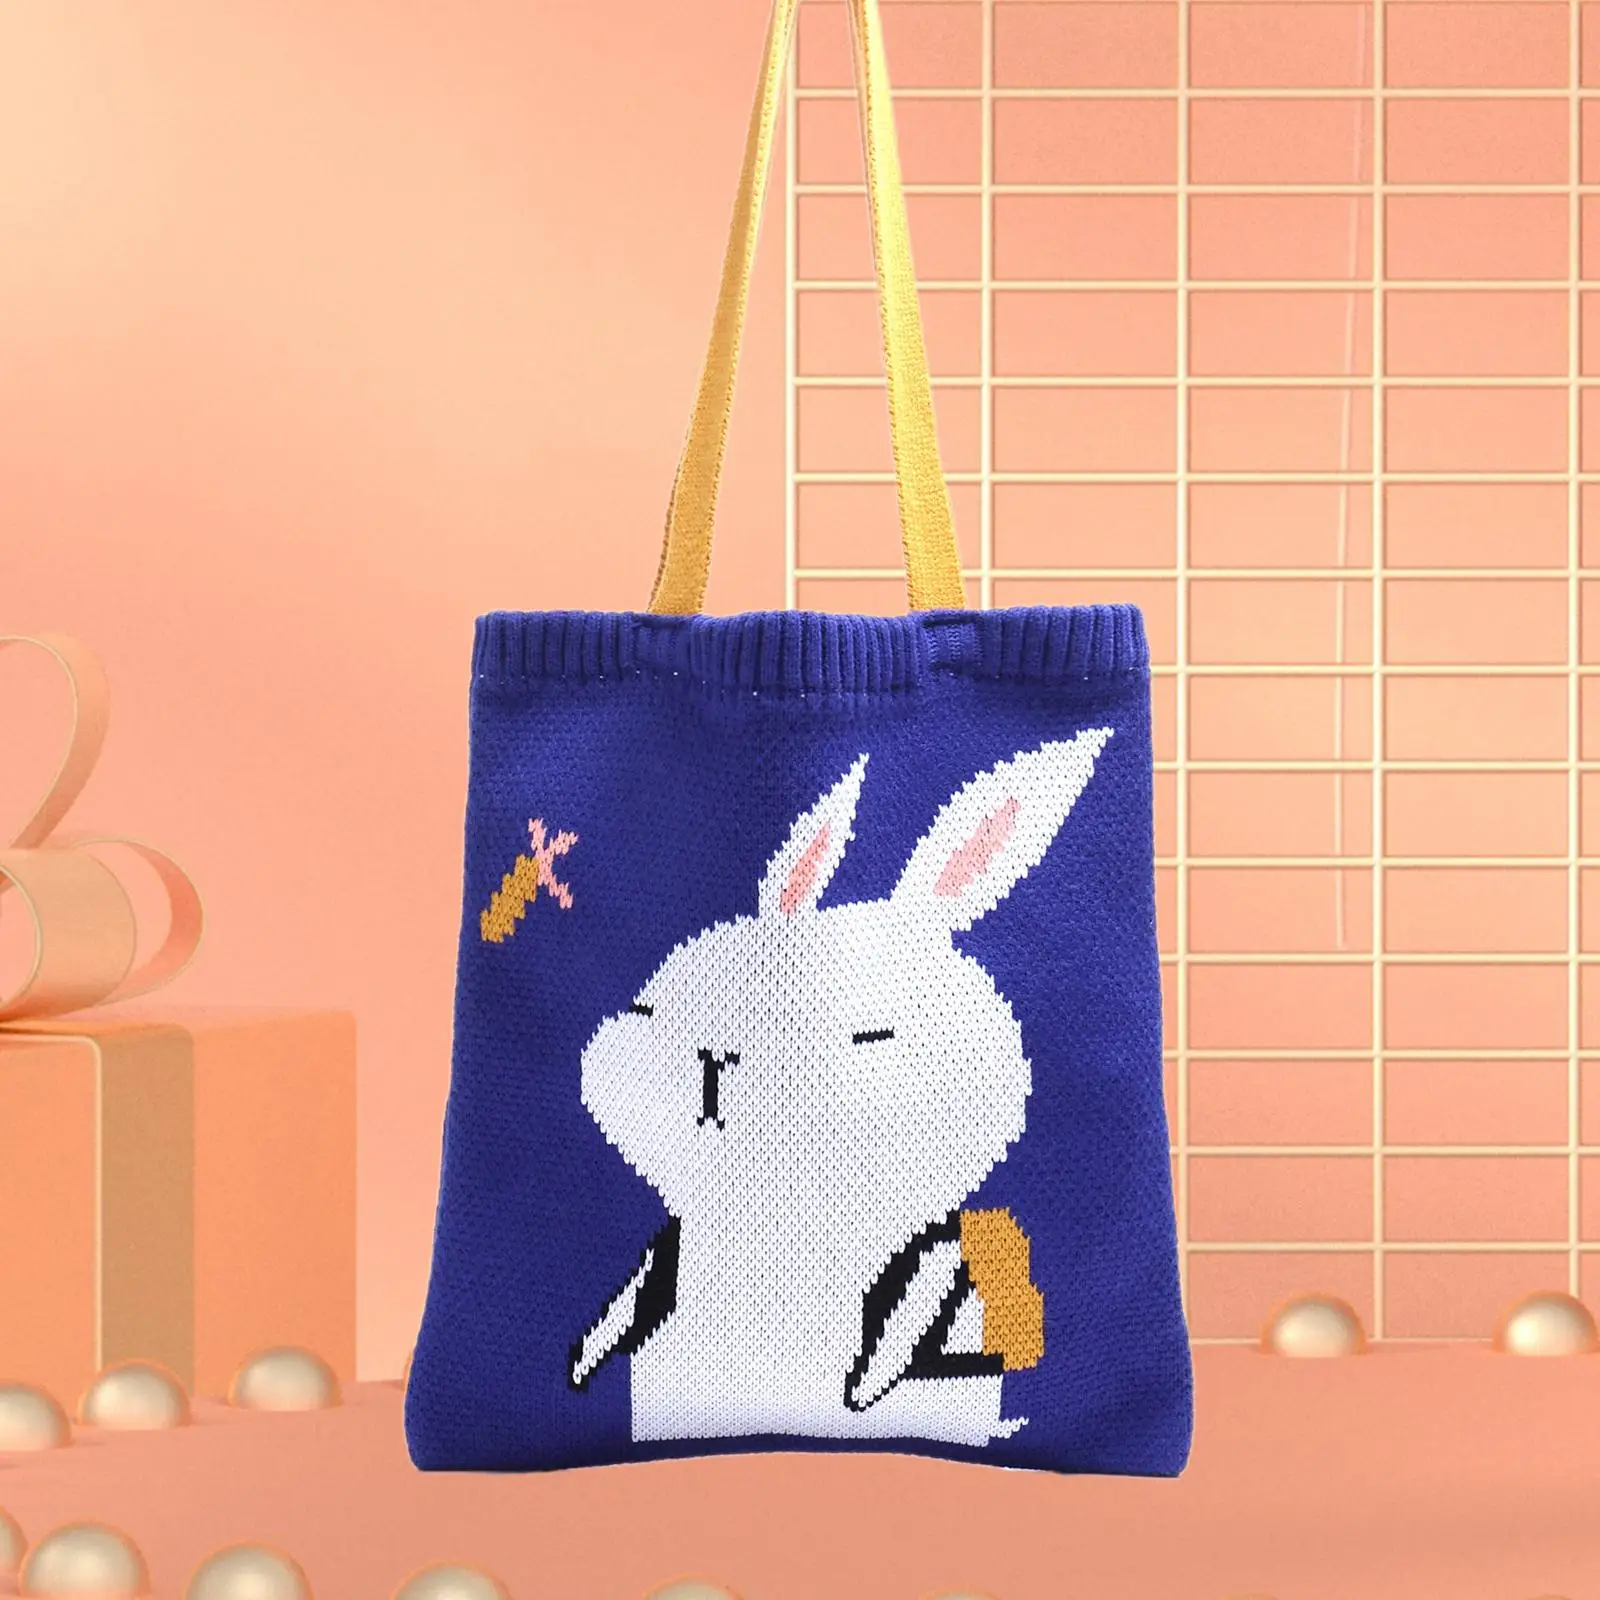 Chic Knitted Bags Handbag Rabbit Shape Sewing Crochet Casual Multipurpose Reusable Hobo Tote for Halloween Dating Girl Women